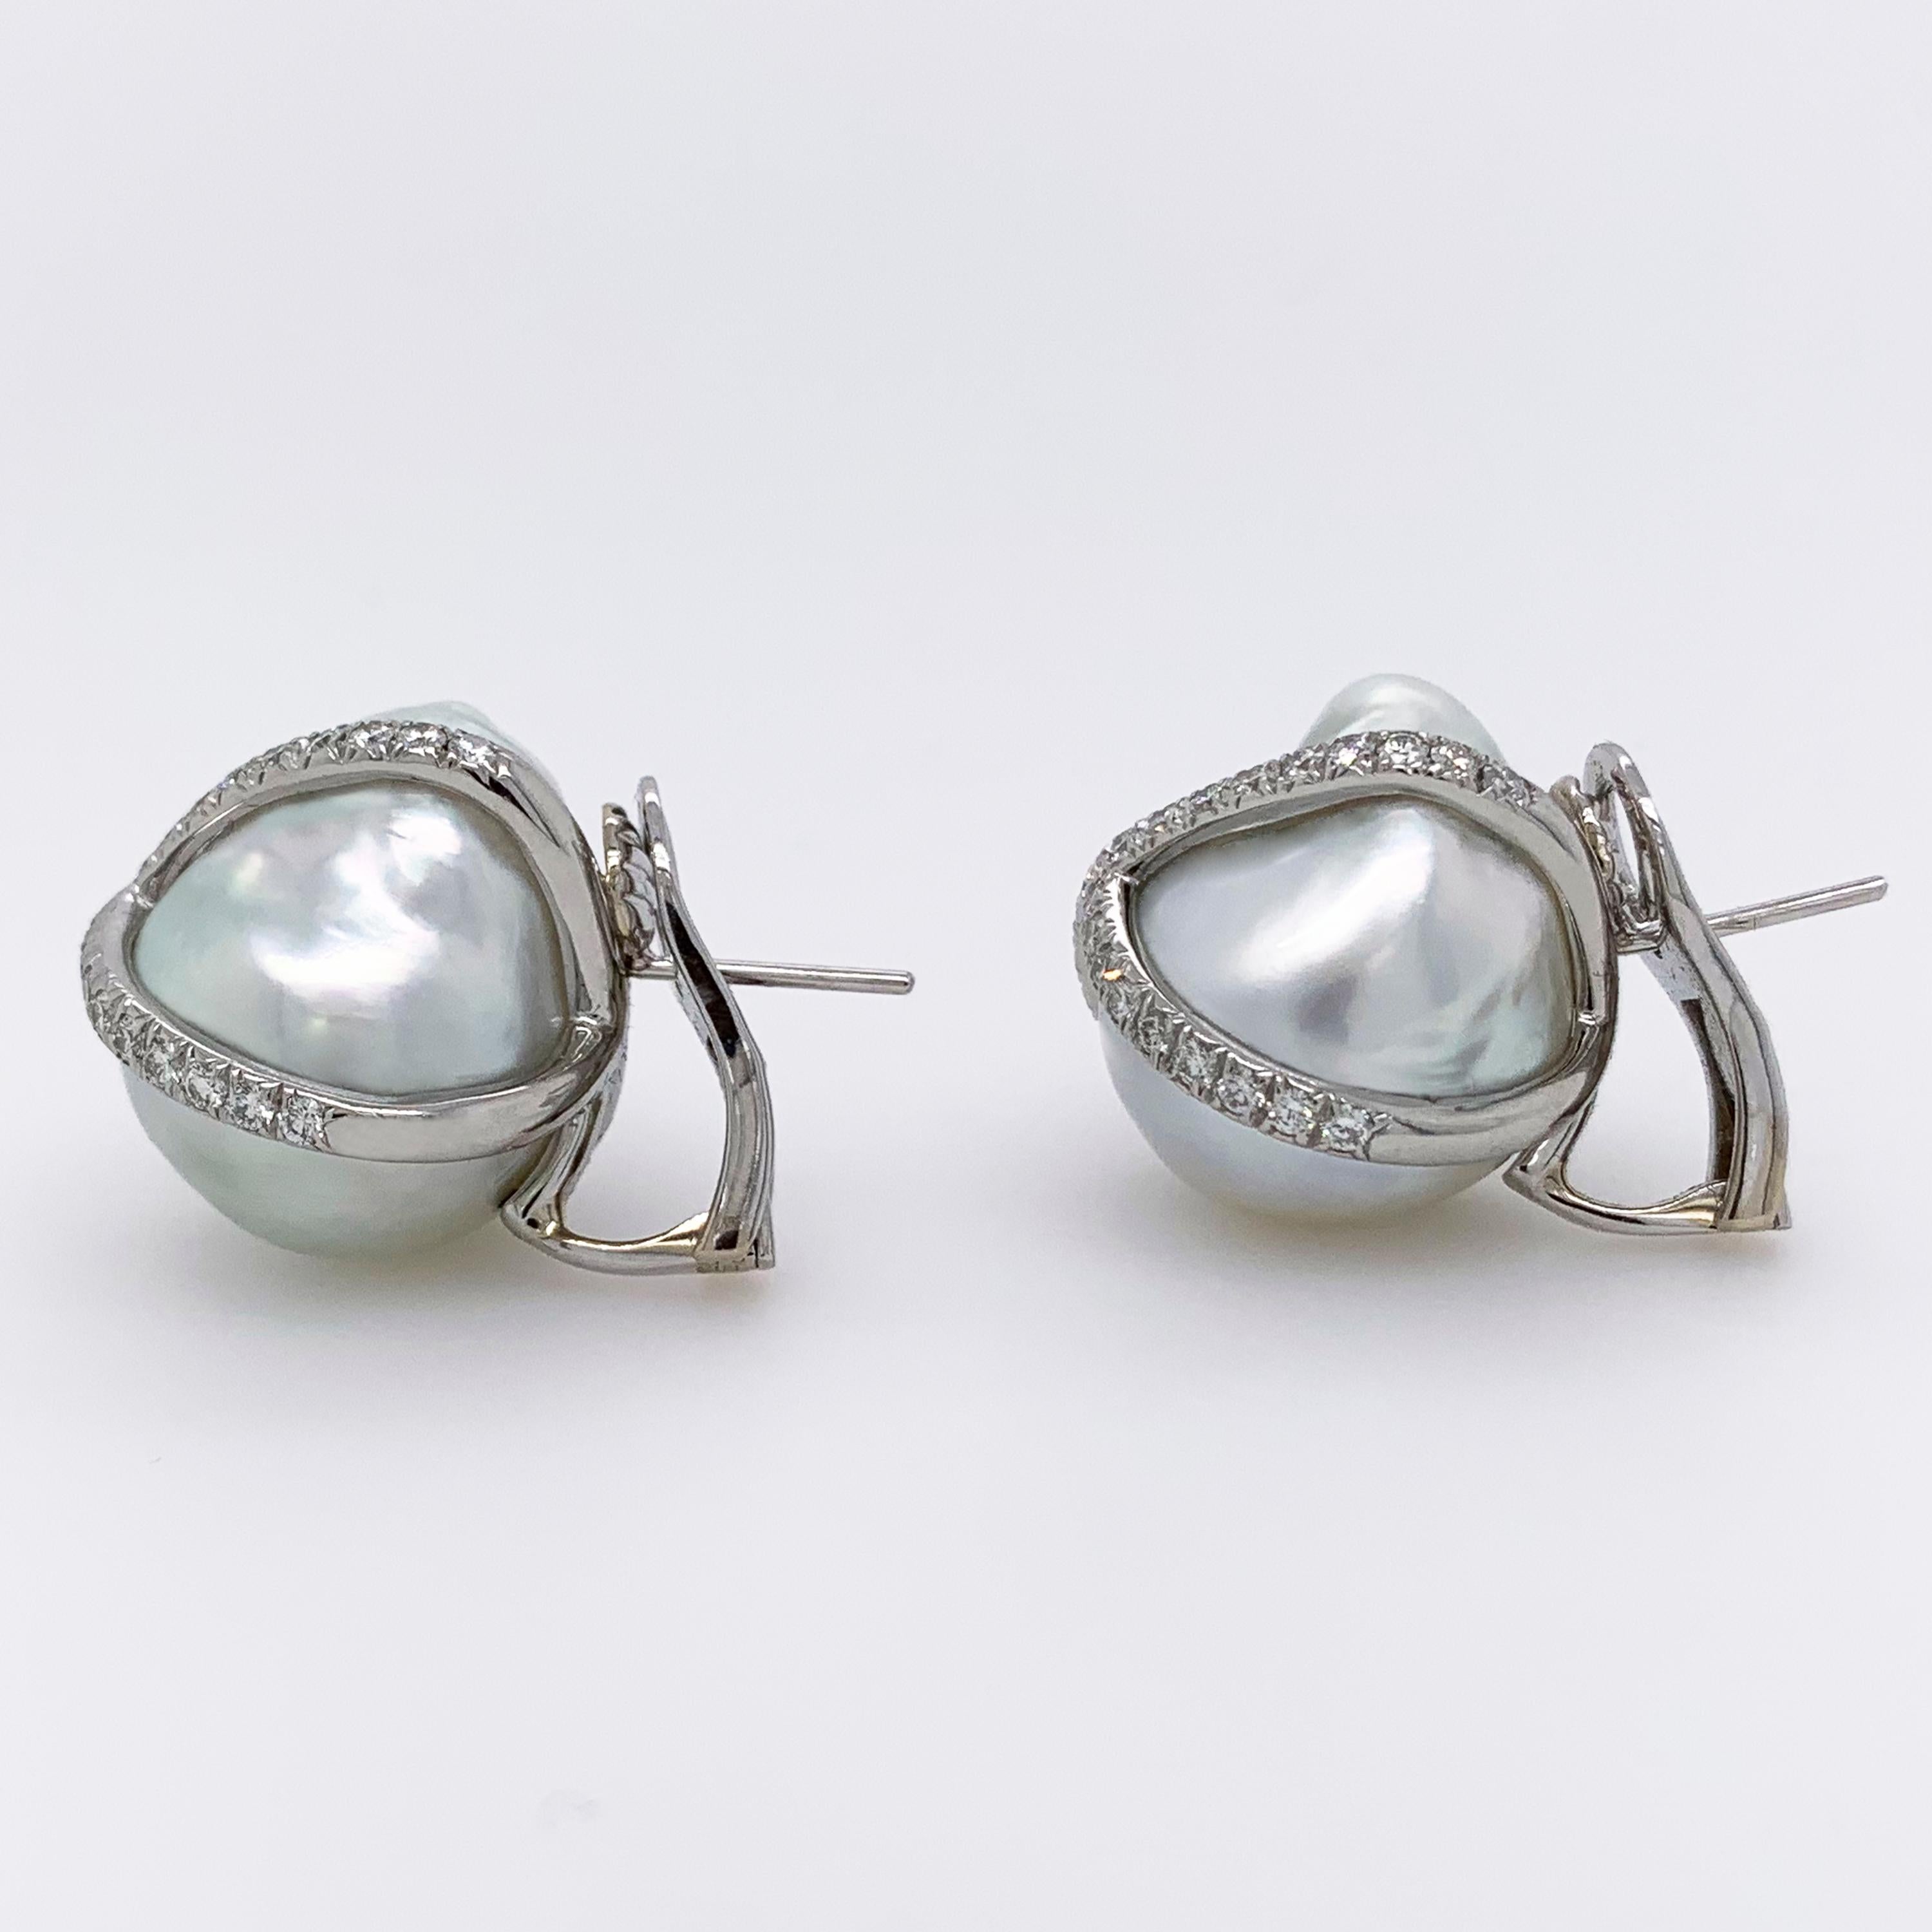 Round Cut Verdura Baroque South Sea Cultured Pearl & Diamond Earrings in Platinum & 18kwg